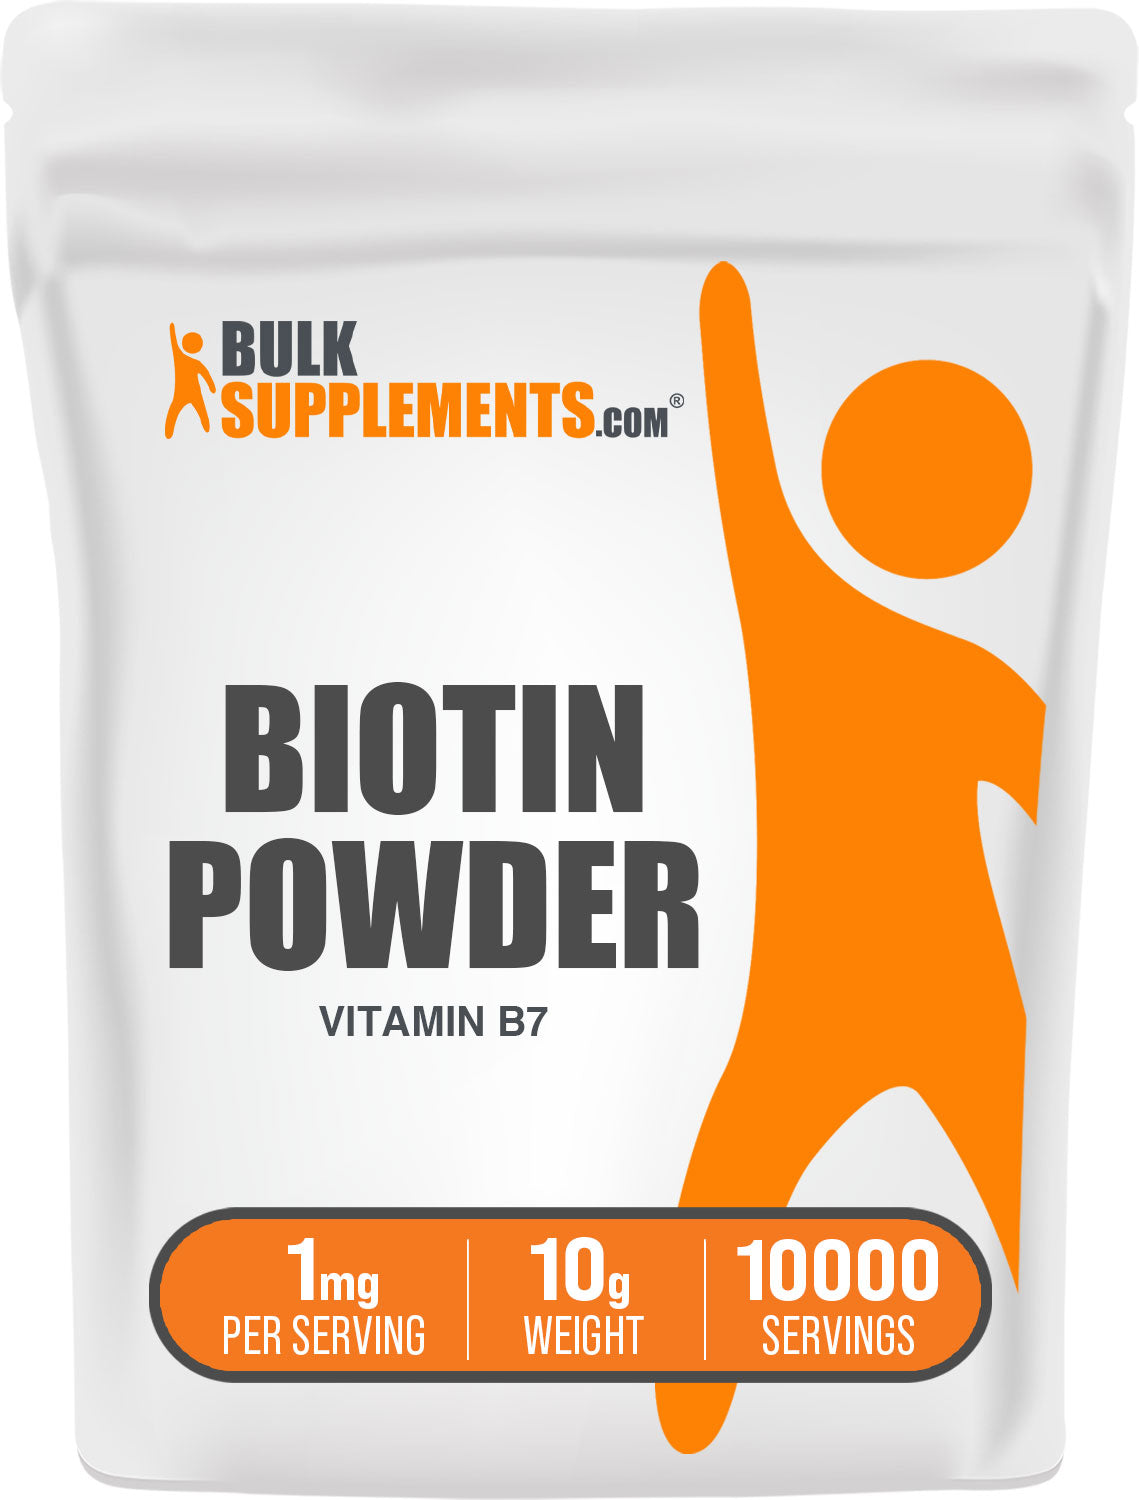 BulkSupplements Biotin Powder Vitamin B7 10g bag